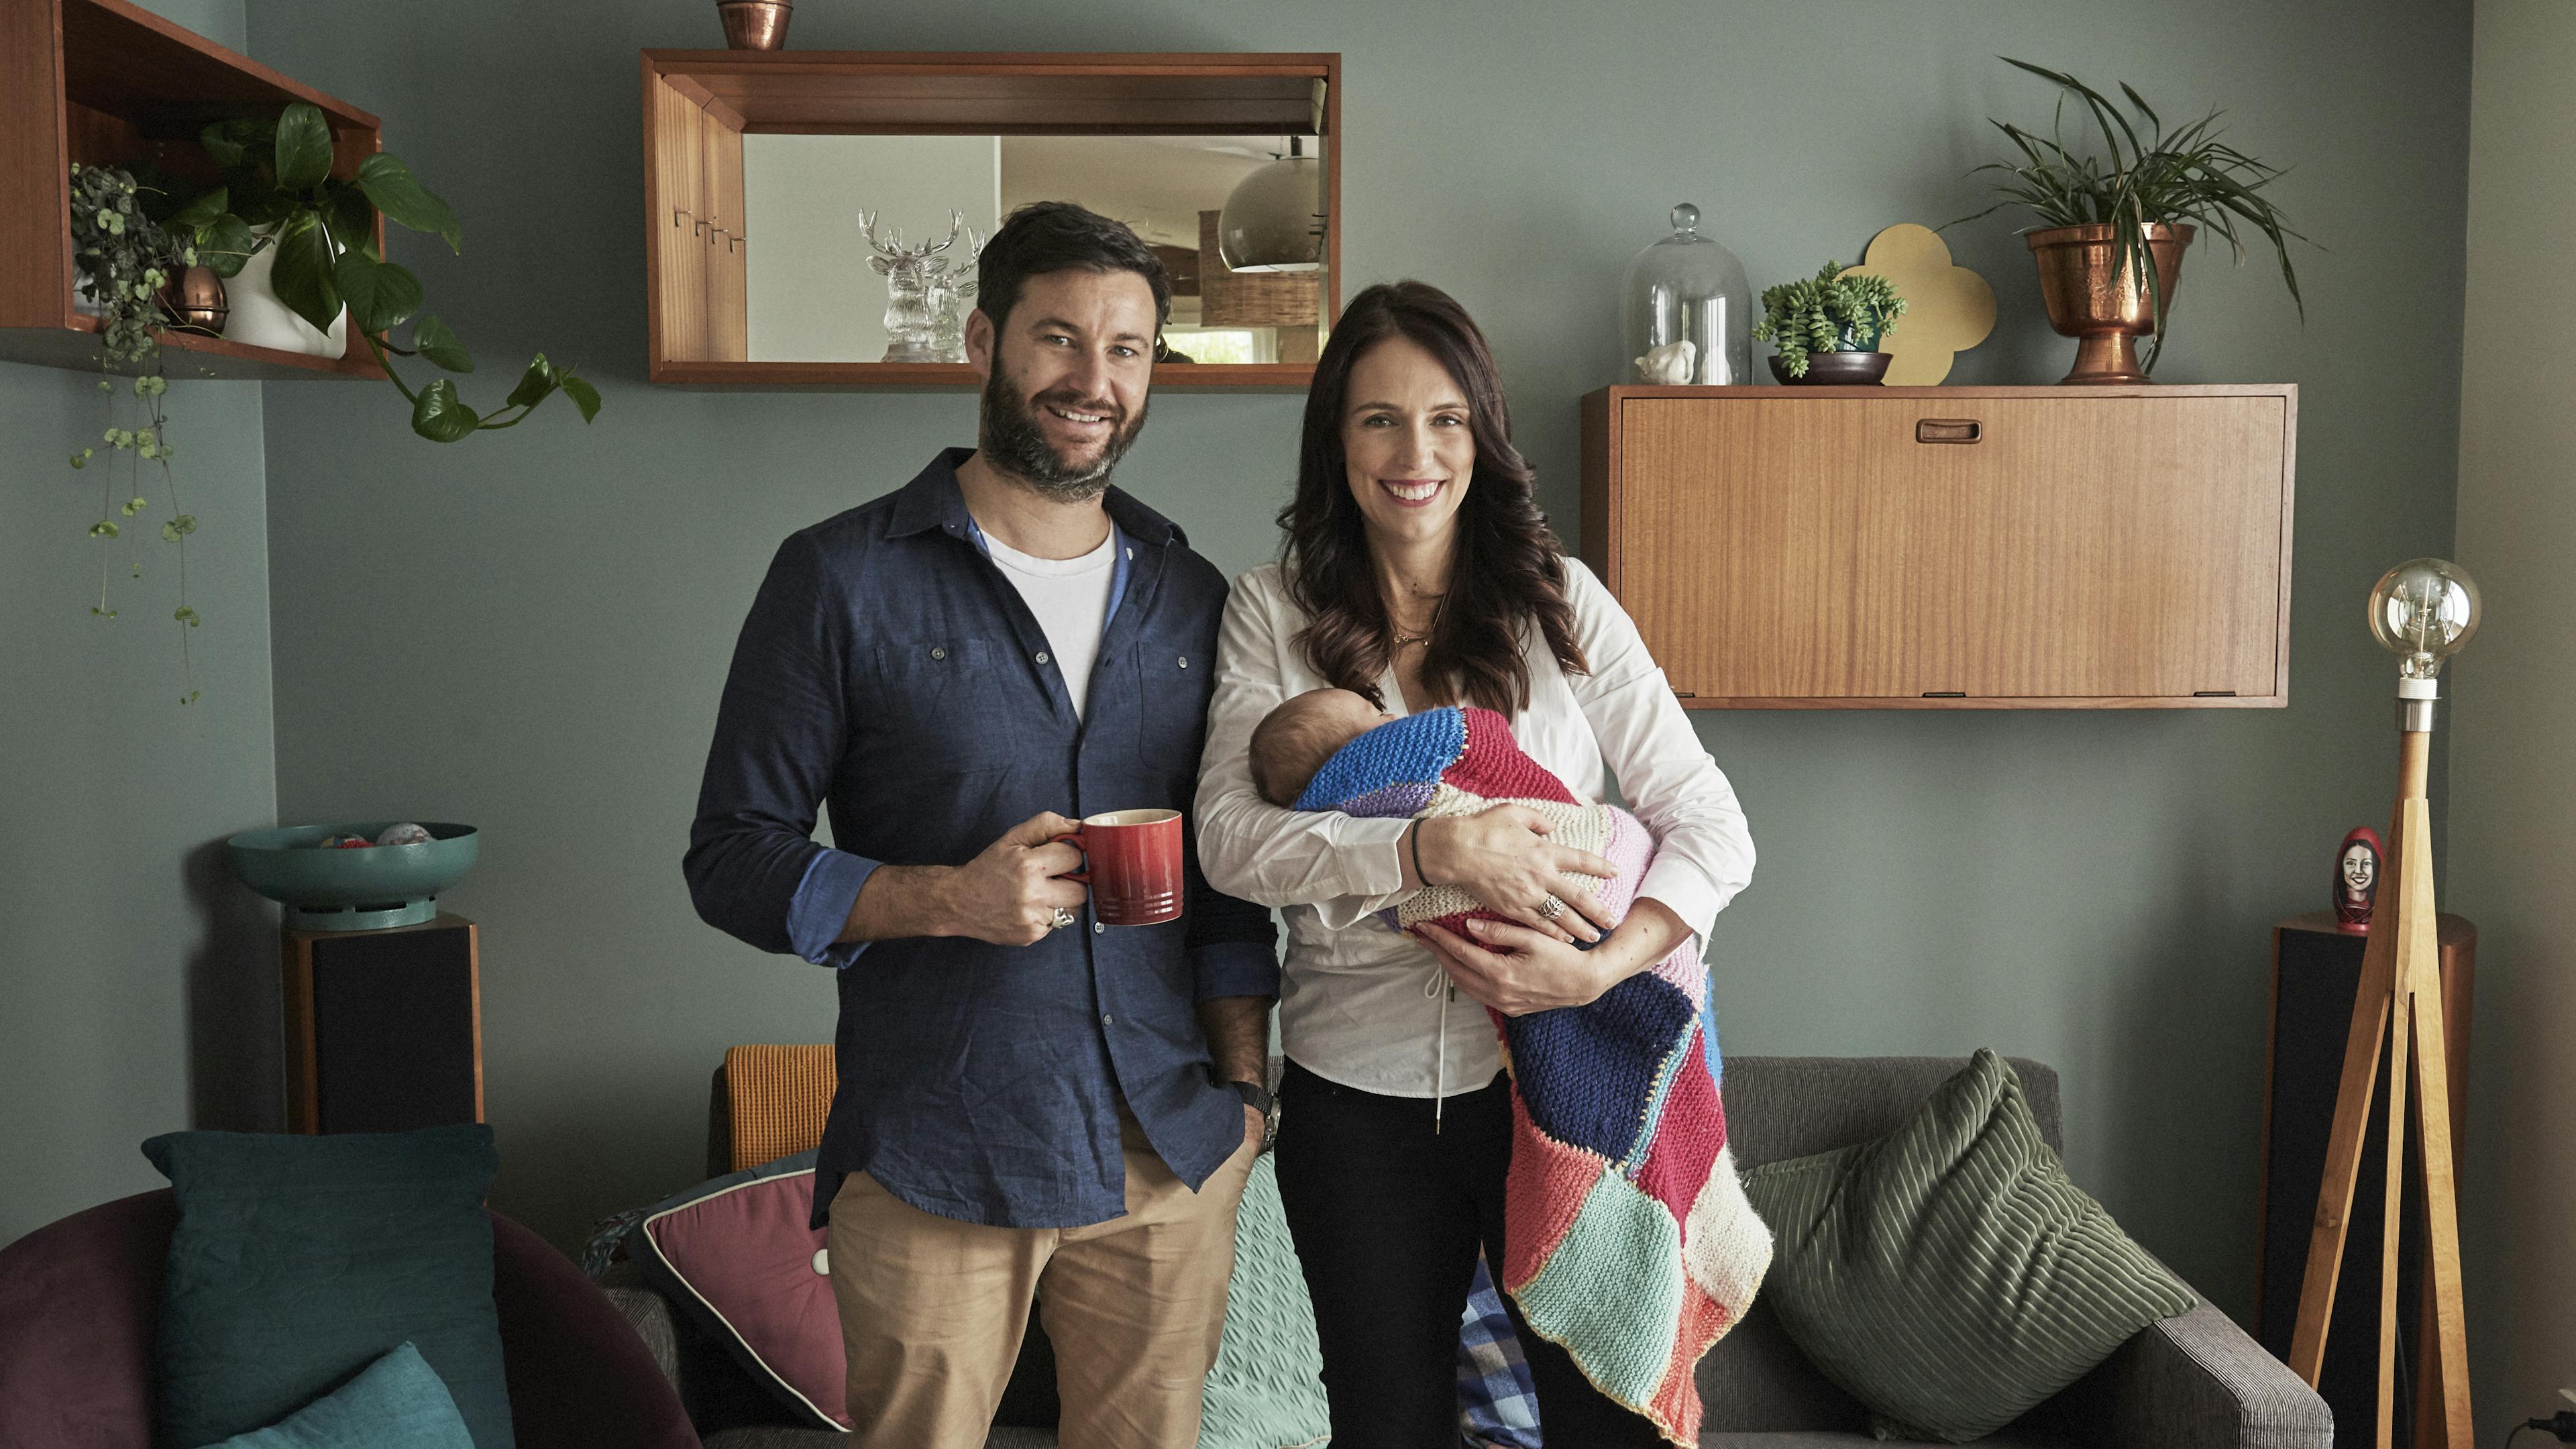 Clarke Gayford and Jacinda Ardern with their baby girl Neve